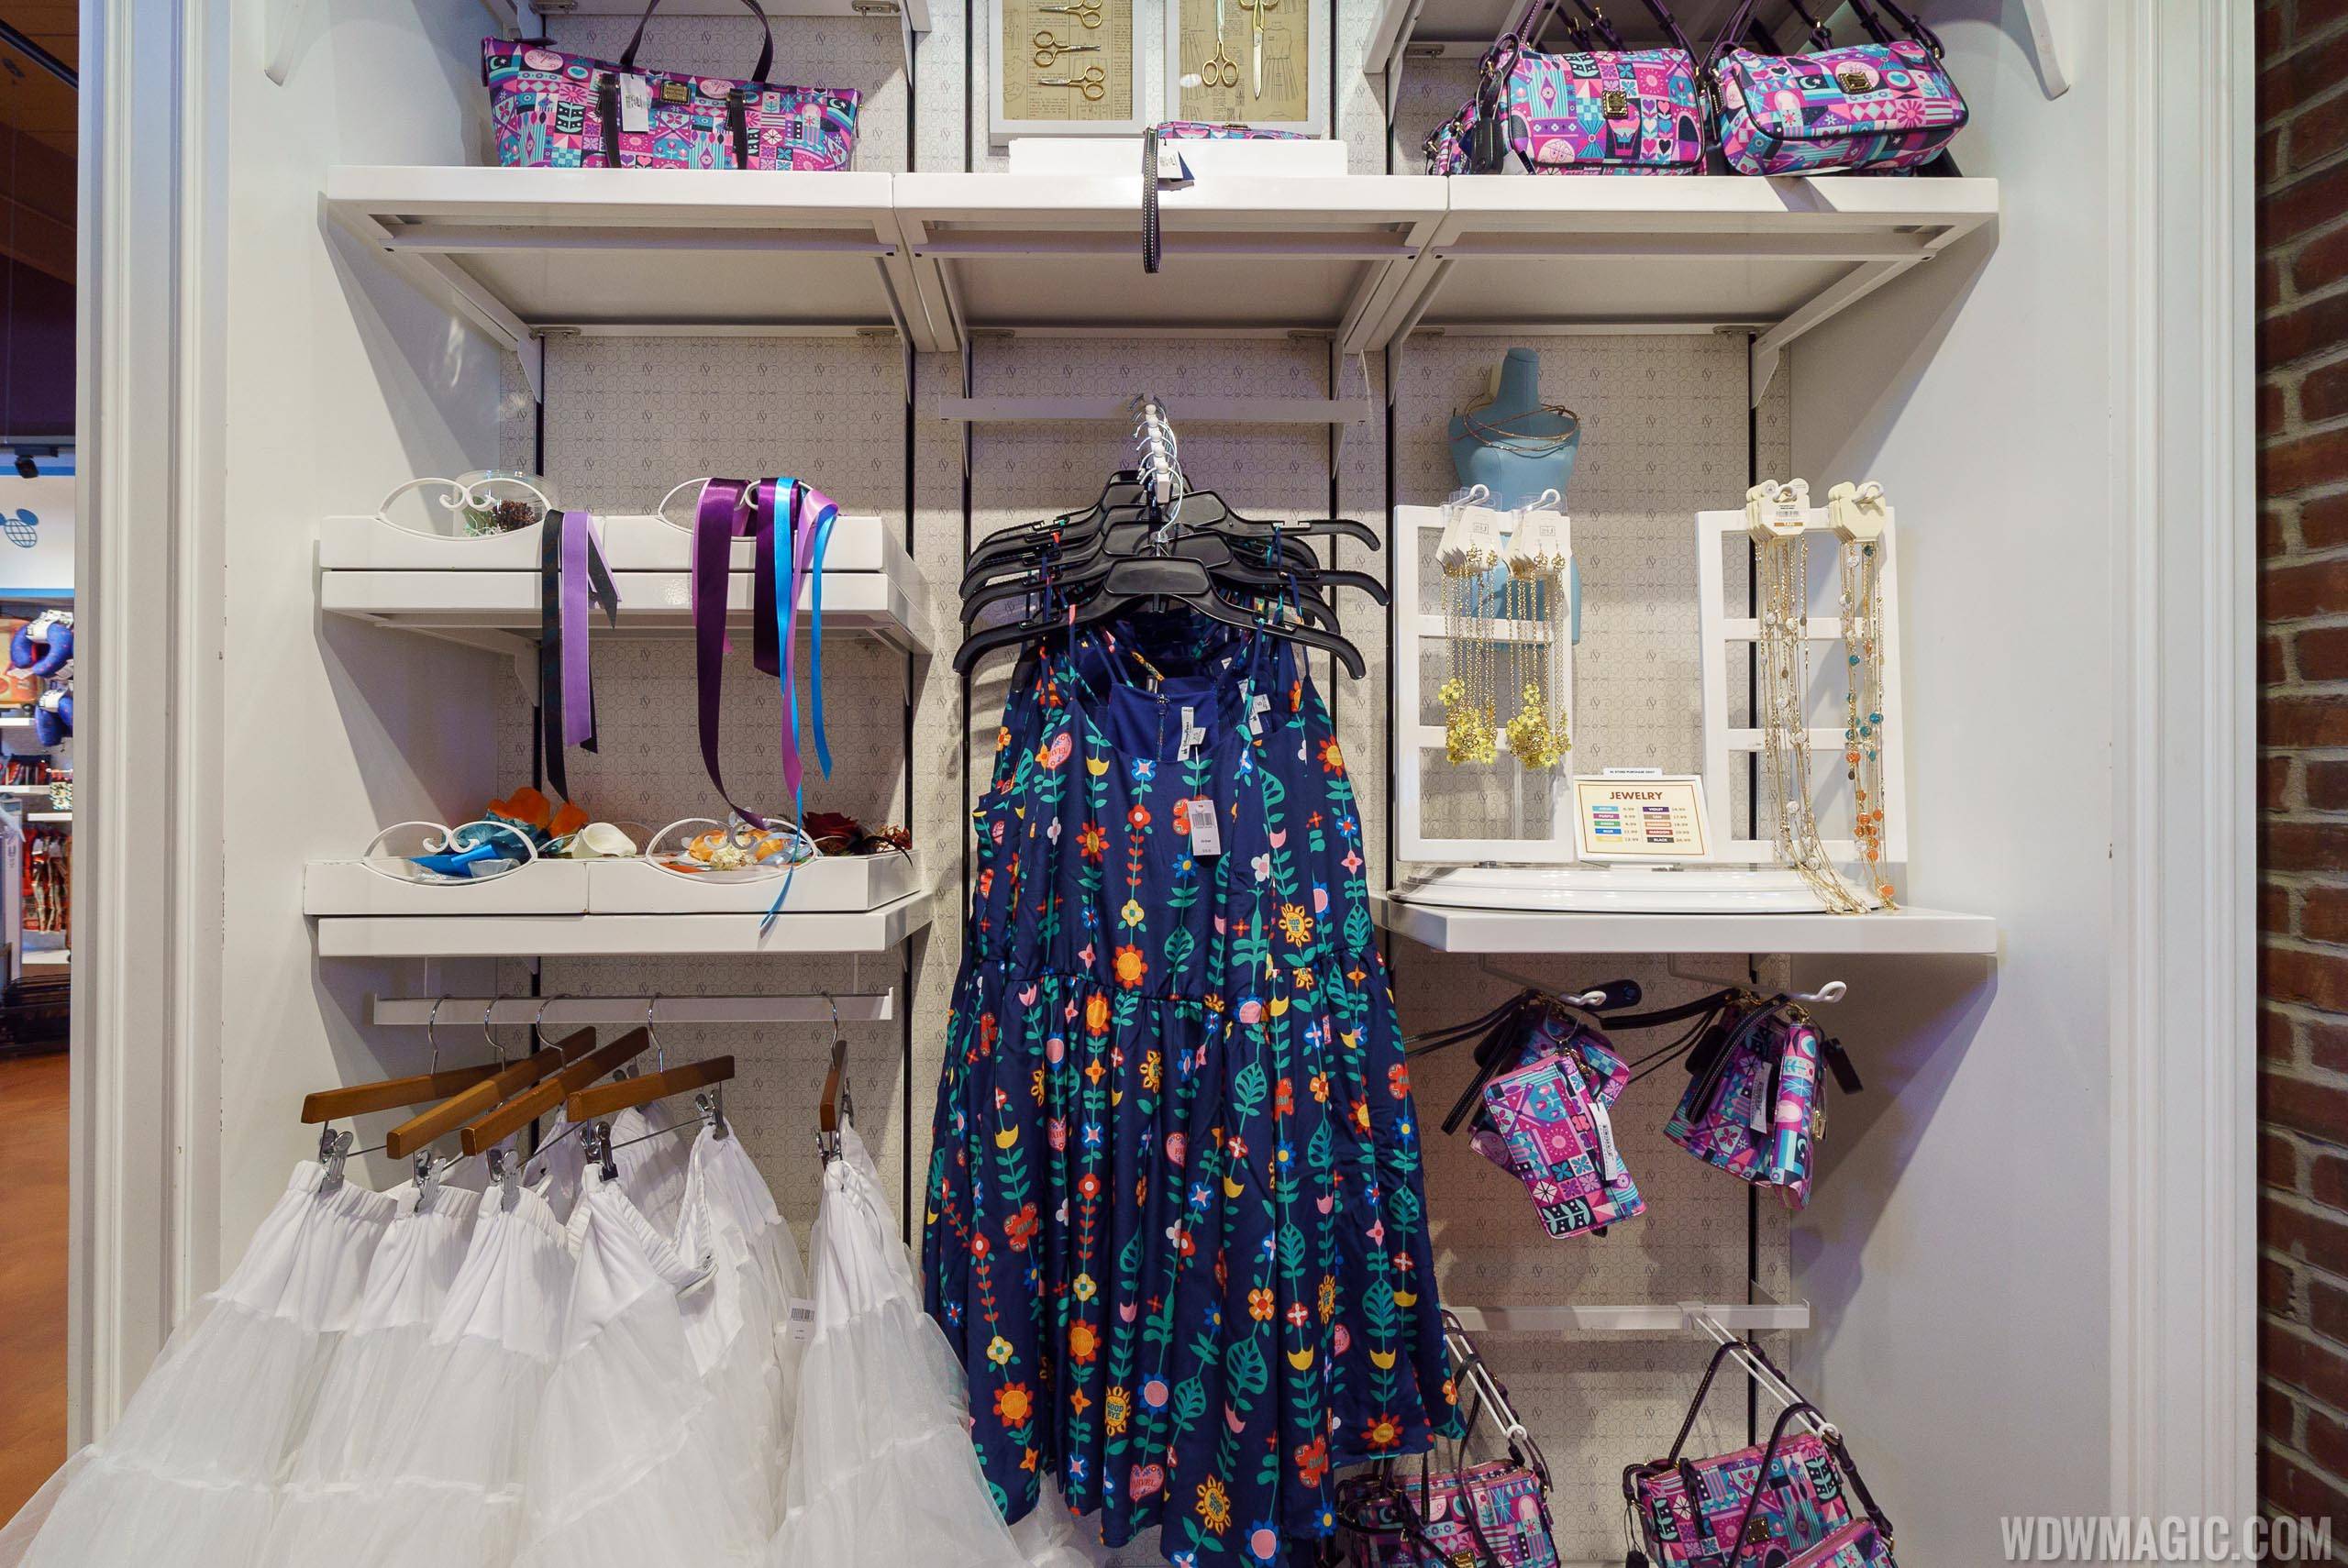 The Dress Shop on Cherry Tree Lane - Small World dress